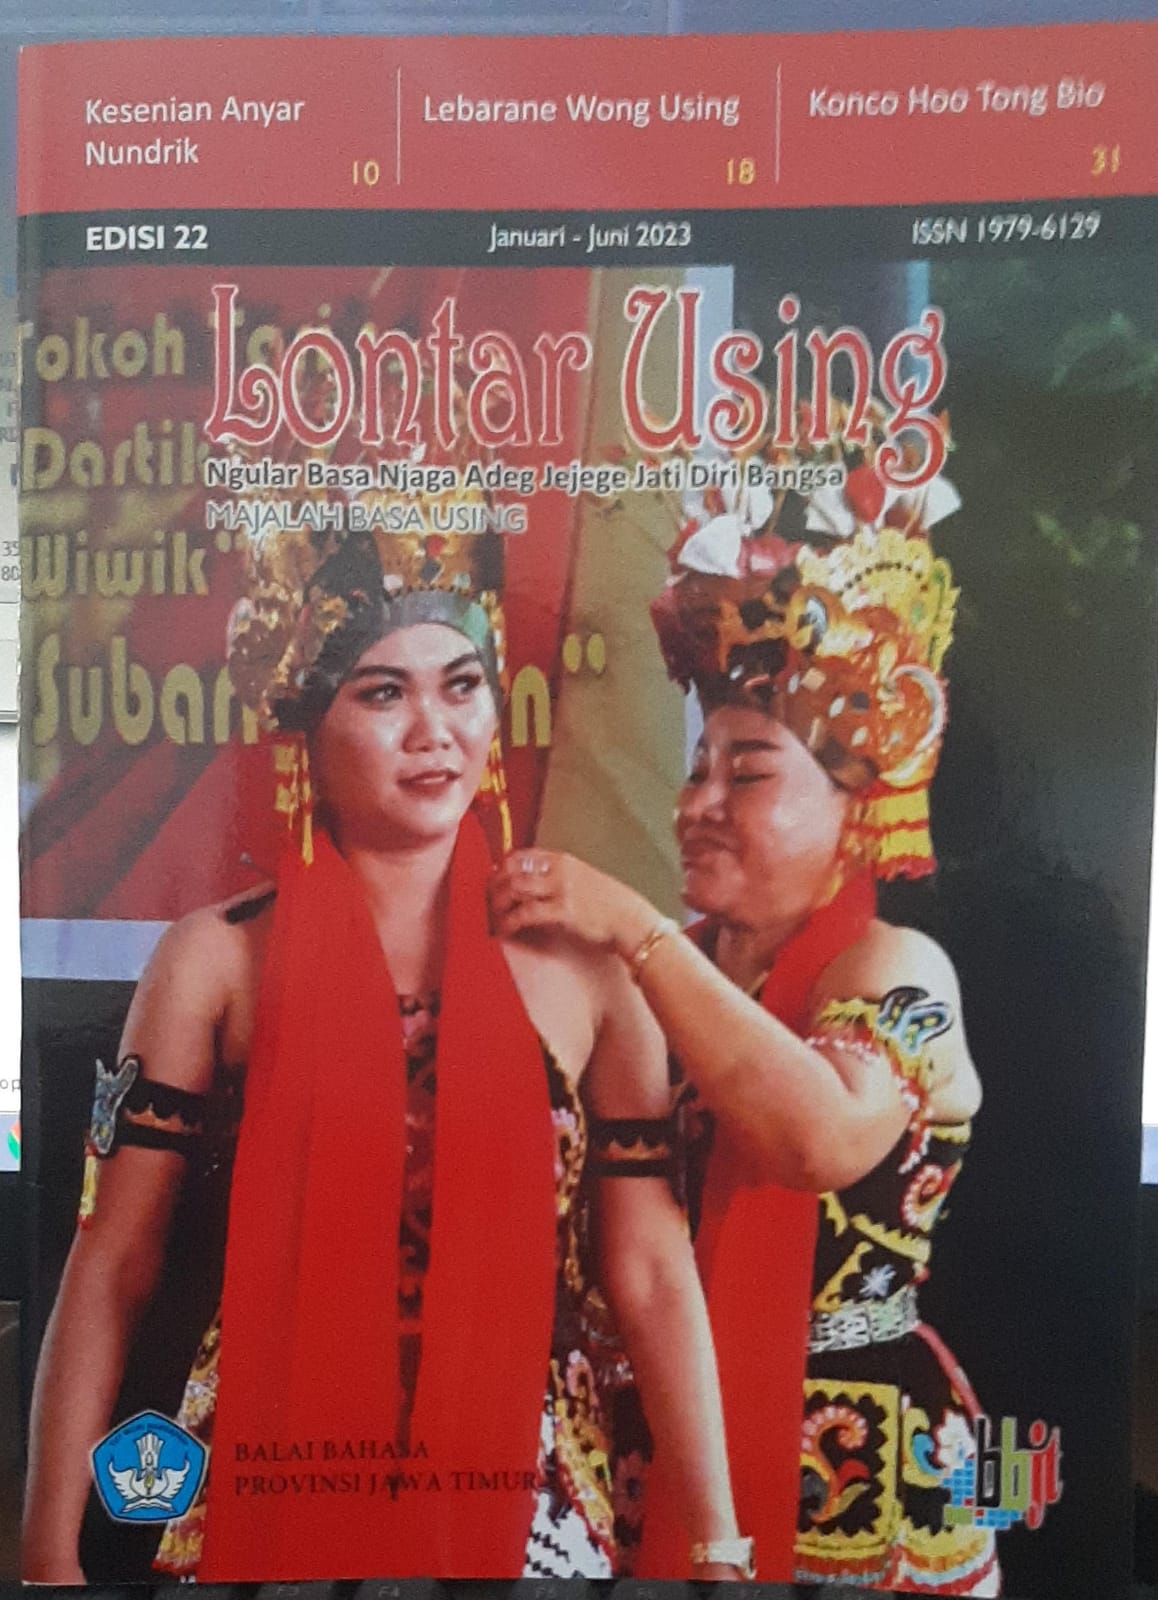 Lontar Using Ngular Basa Njaga Adeg Jejege Jati Diri Bangsa (majalah Bahasa Using) Jan-juni 2023